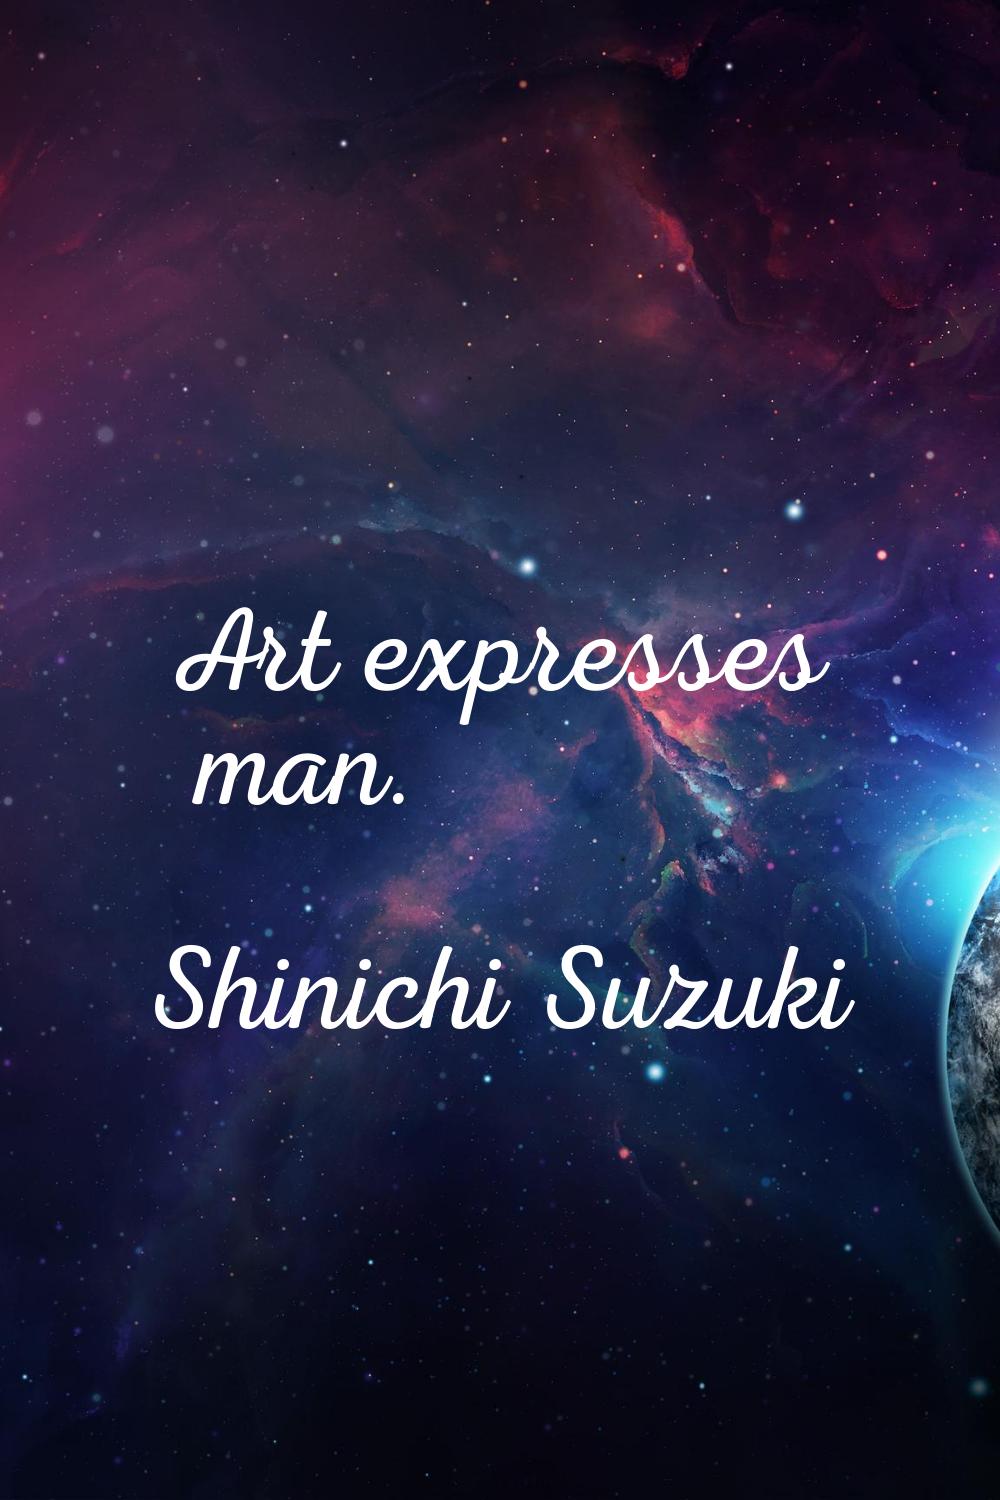 Art expresses man.